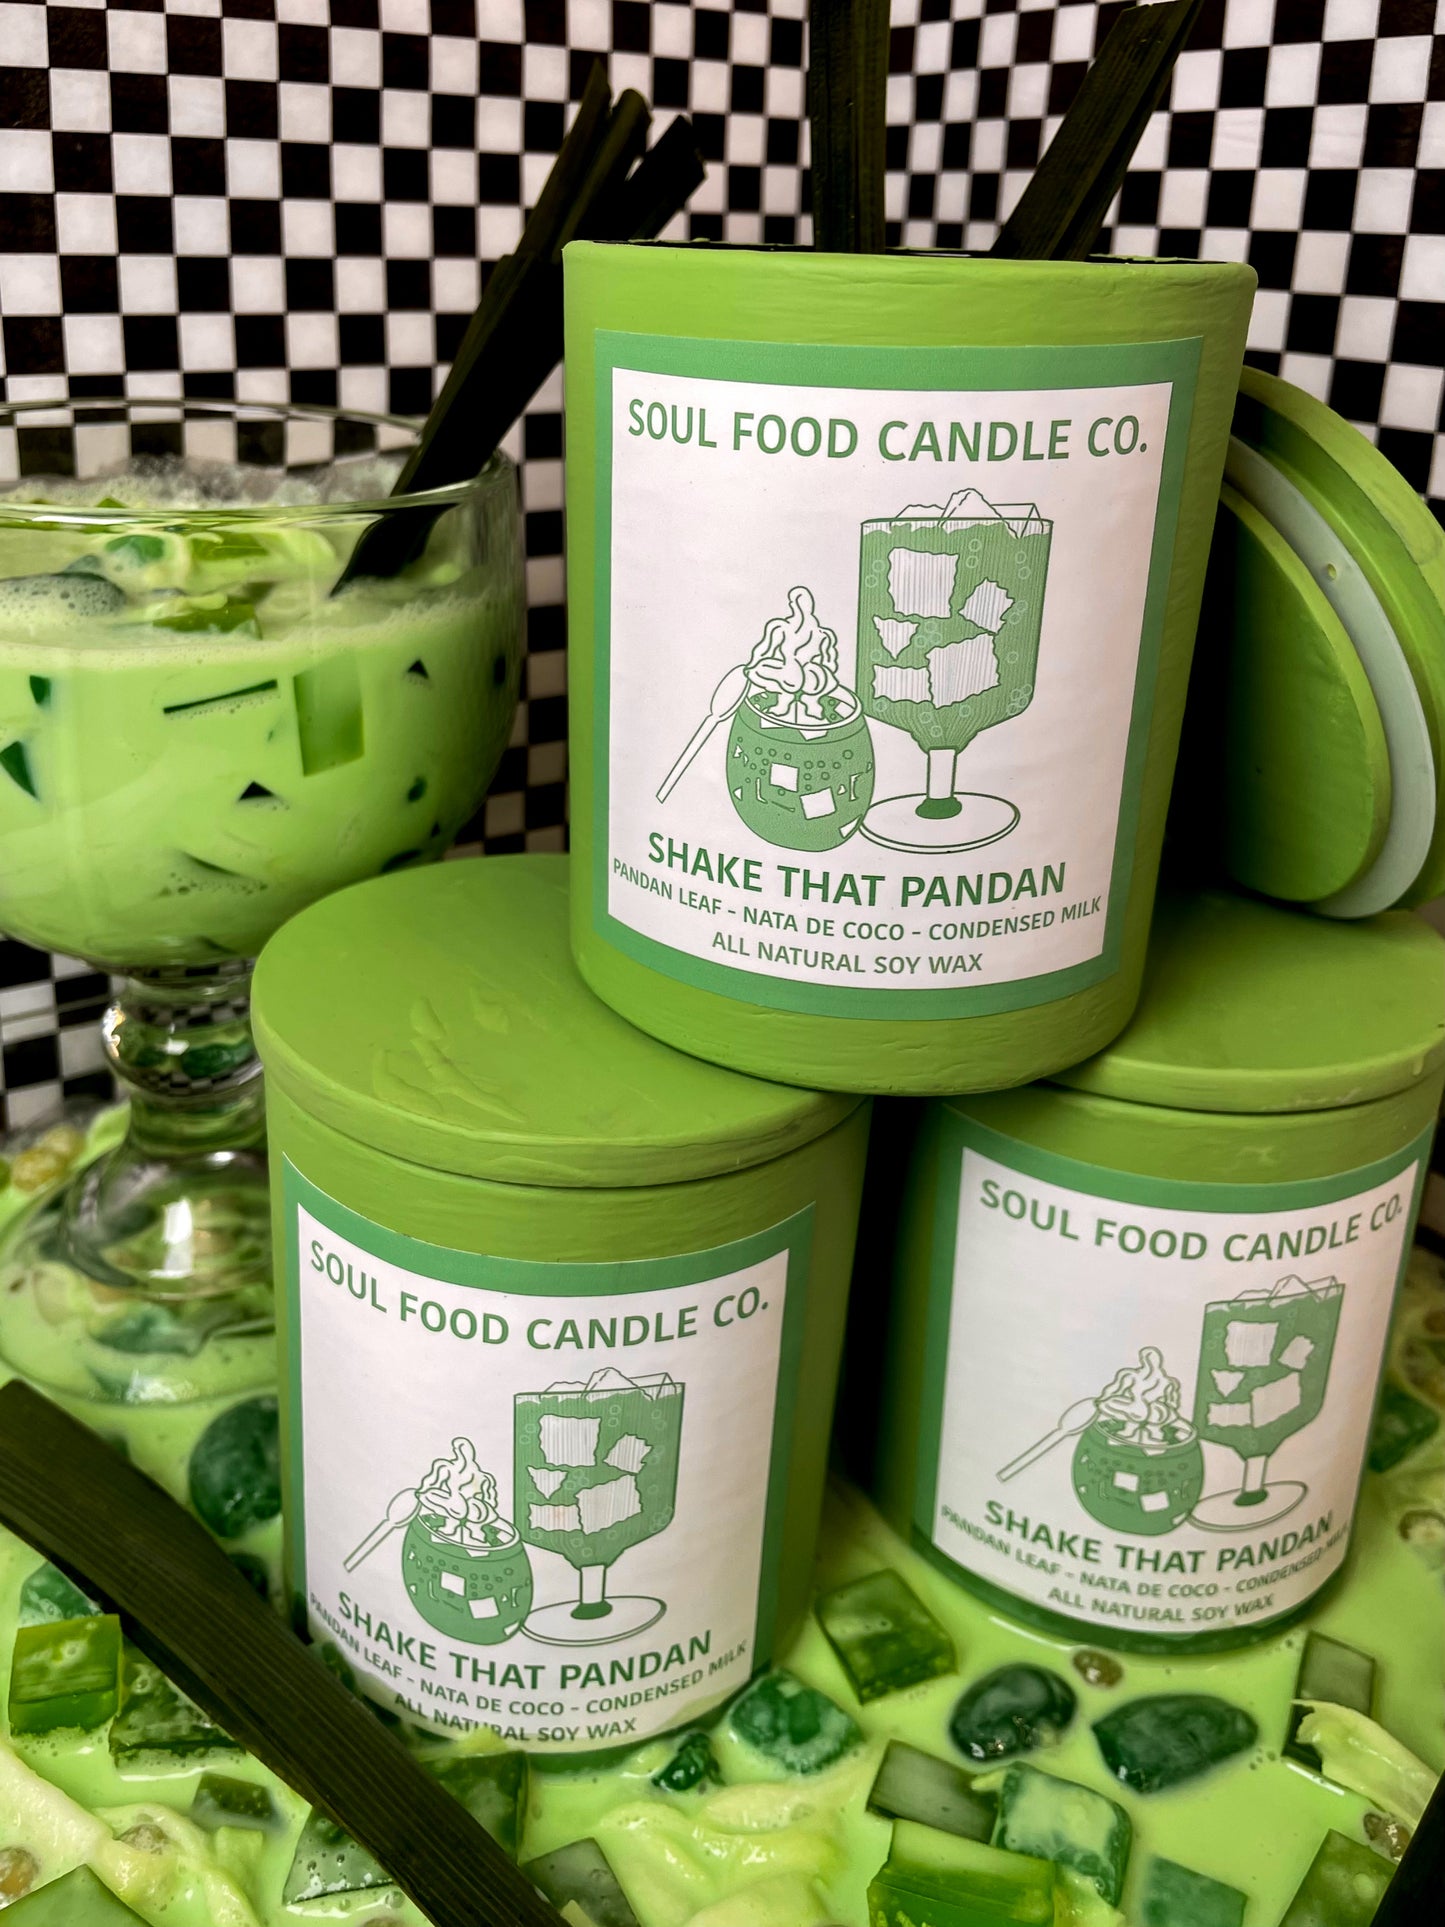 Shake That Pandan - Soul Food Candle Company